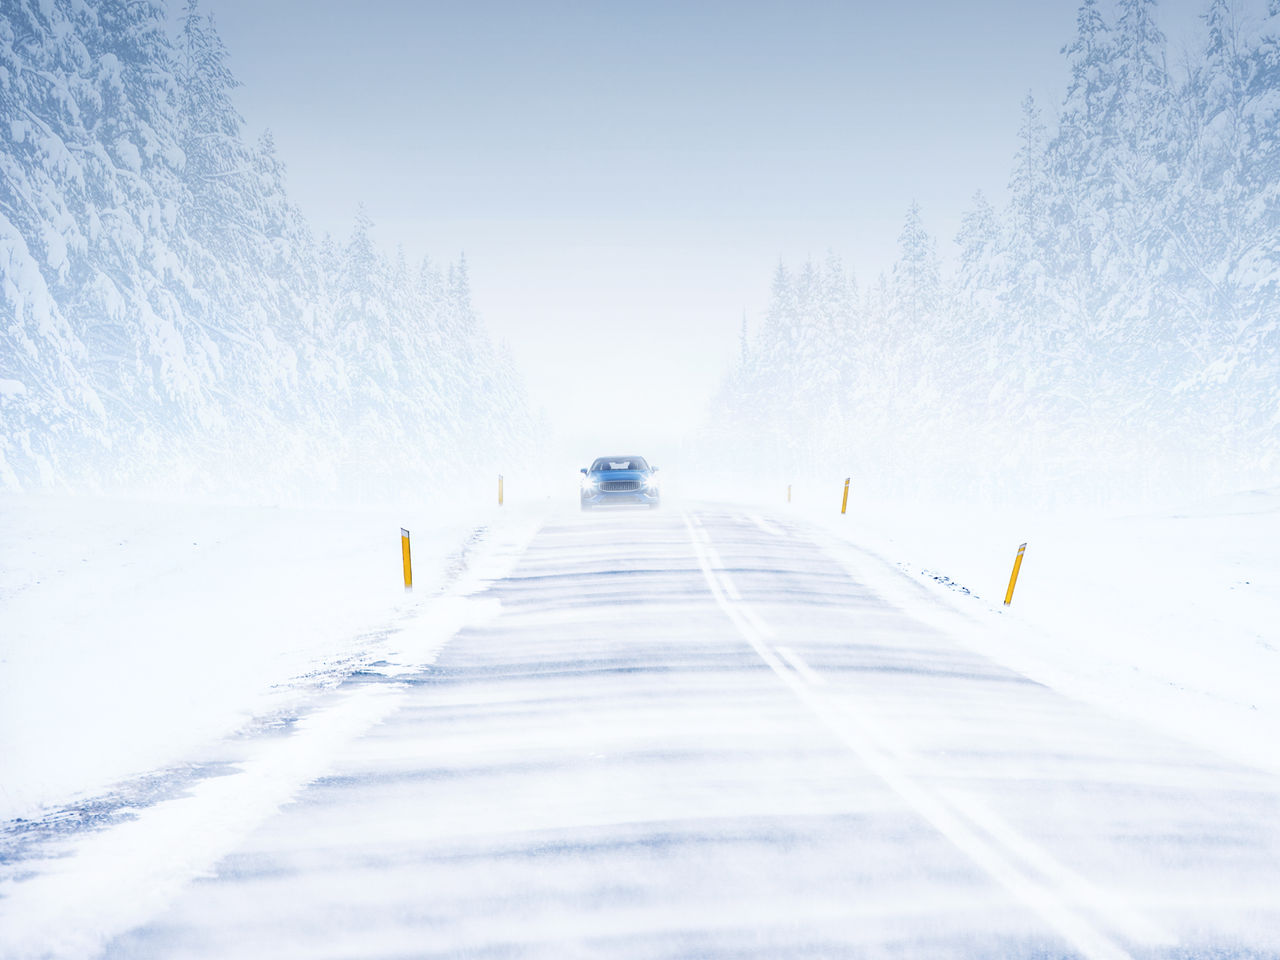 Gislaved Car in Snow Visual Bright Winter 19